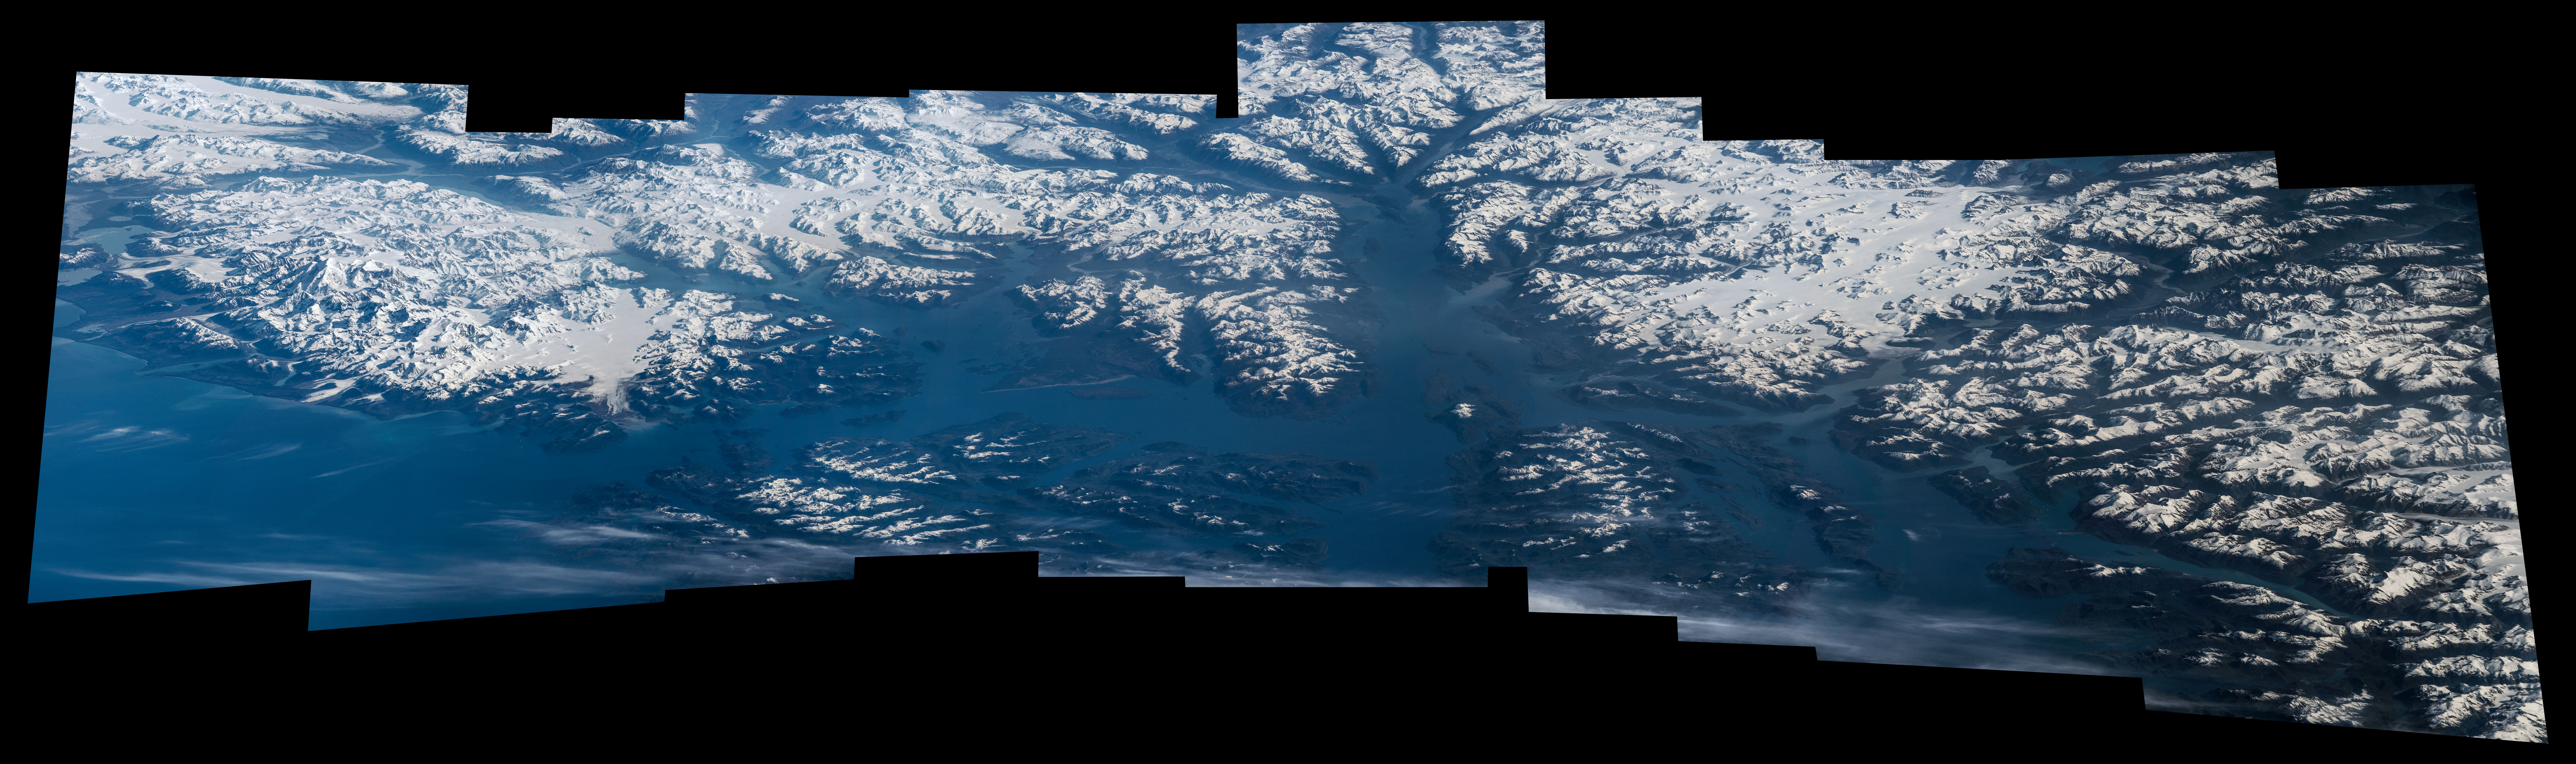 Juneau and the Glacier Bay National Park